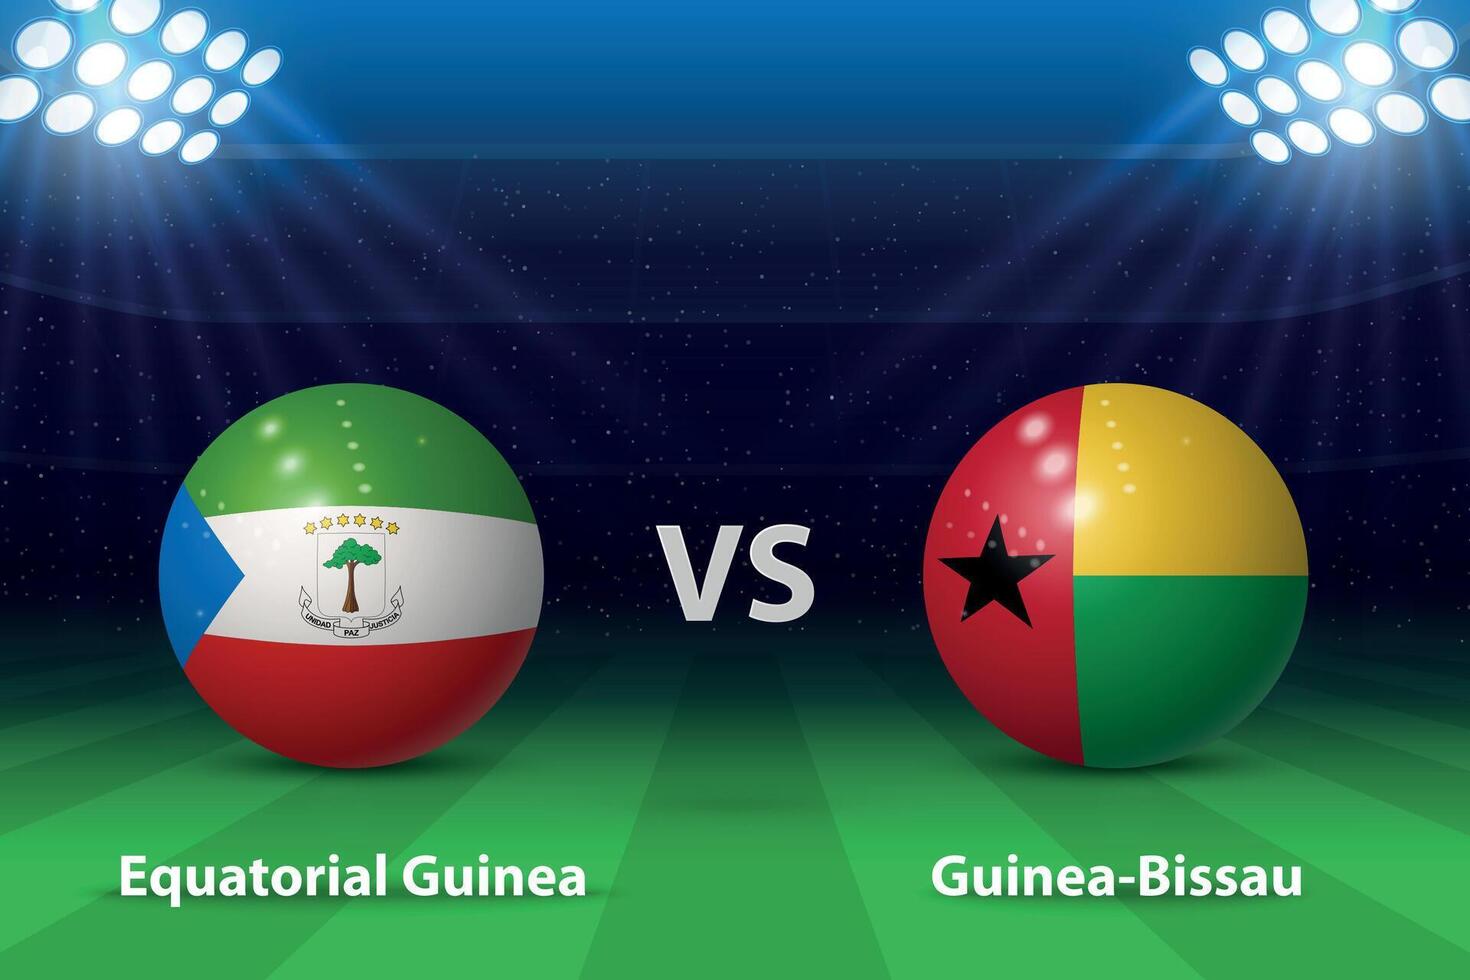 äquatorial Guinea vs. Guinea bissau Fußball Anzeigetafel Übertragung Grafik vektor